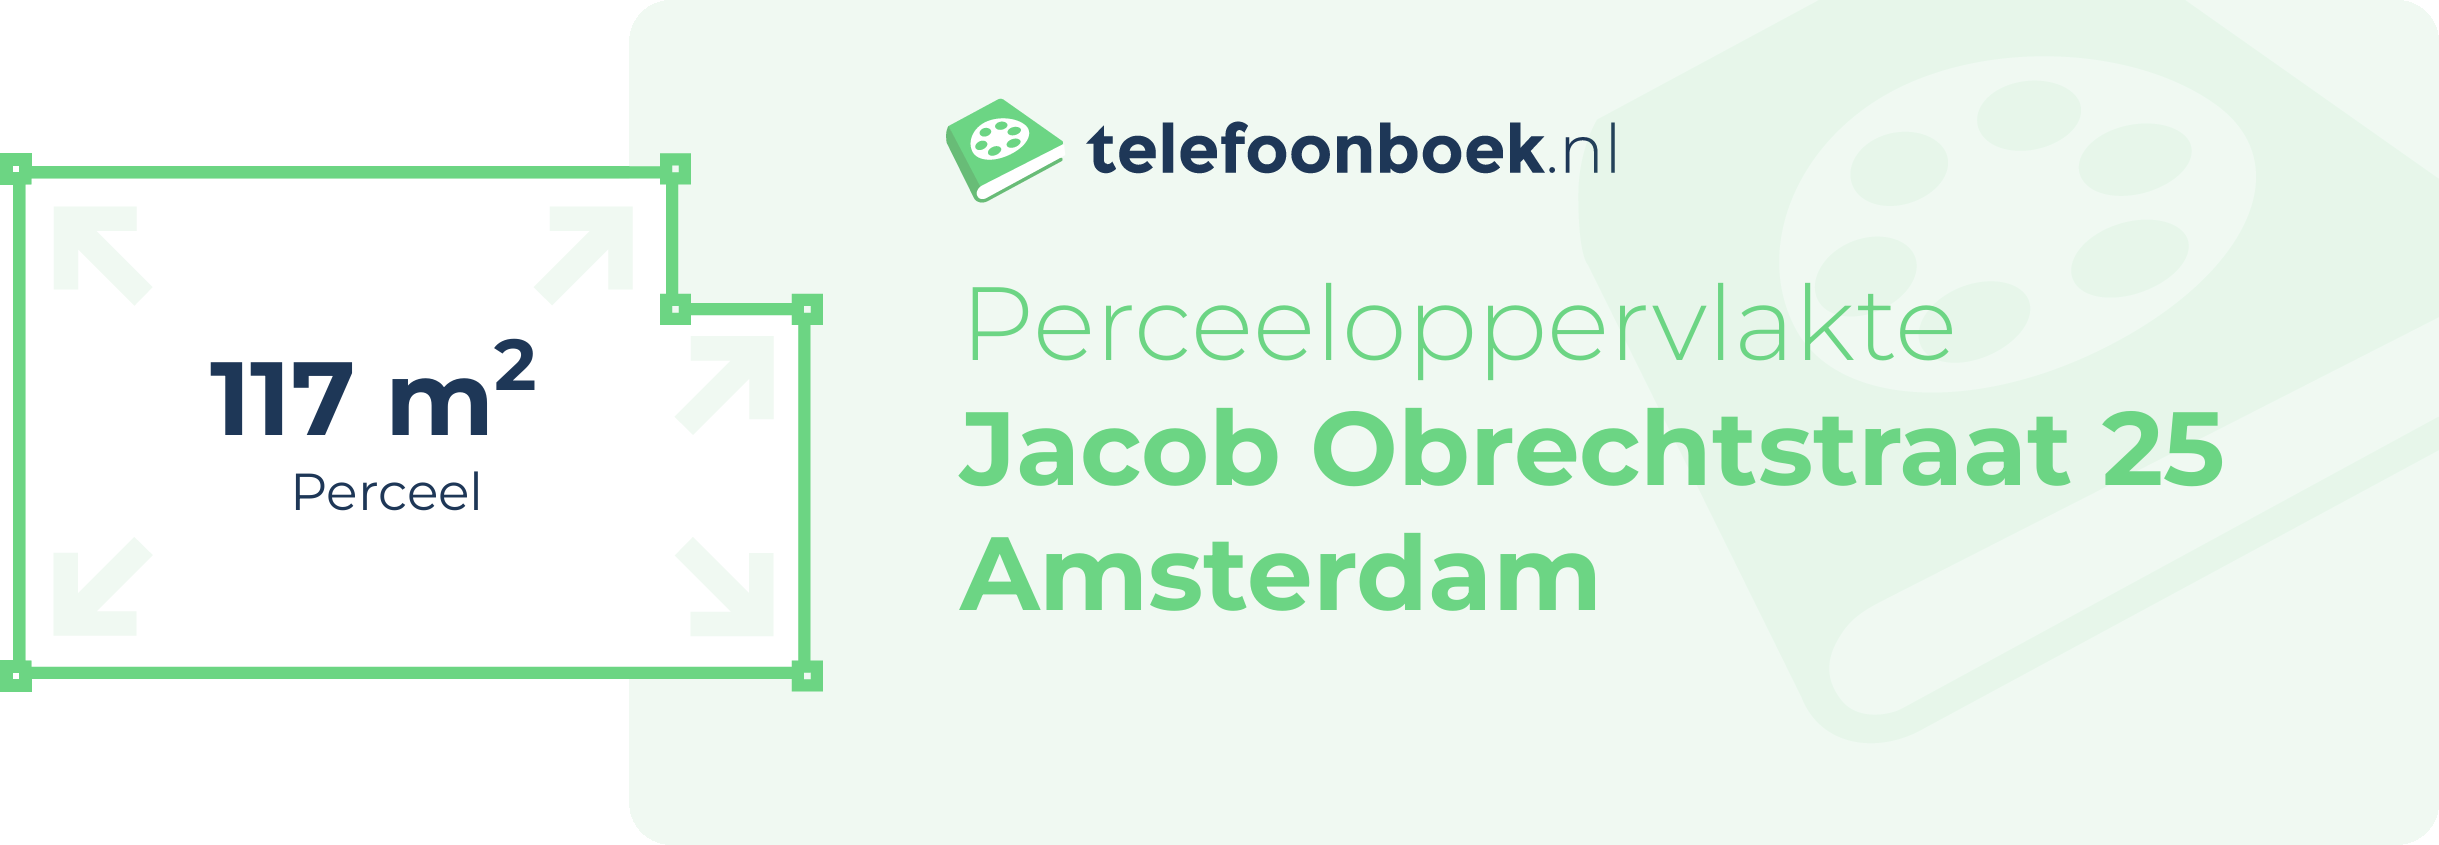 Perceeloppervlakte Jacob Obrechtstraat 25 Amsterdam